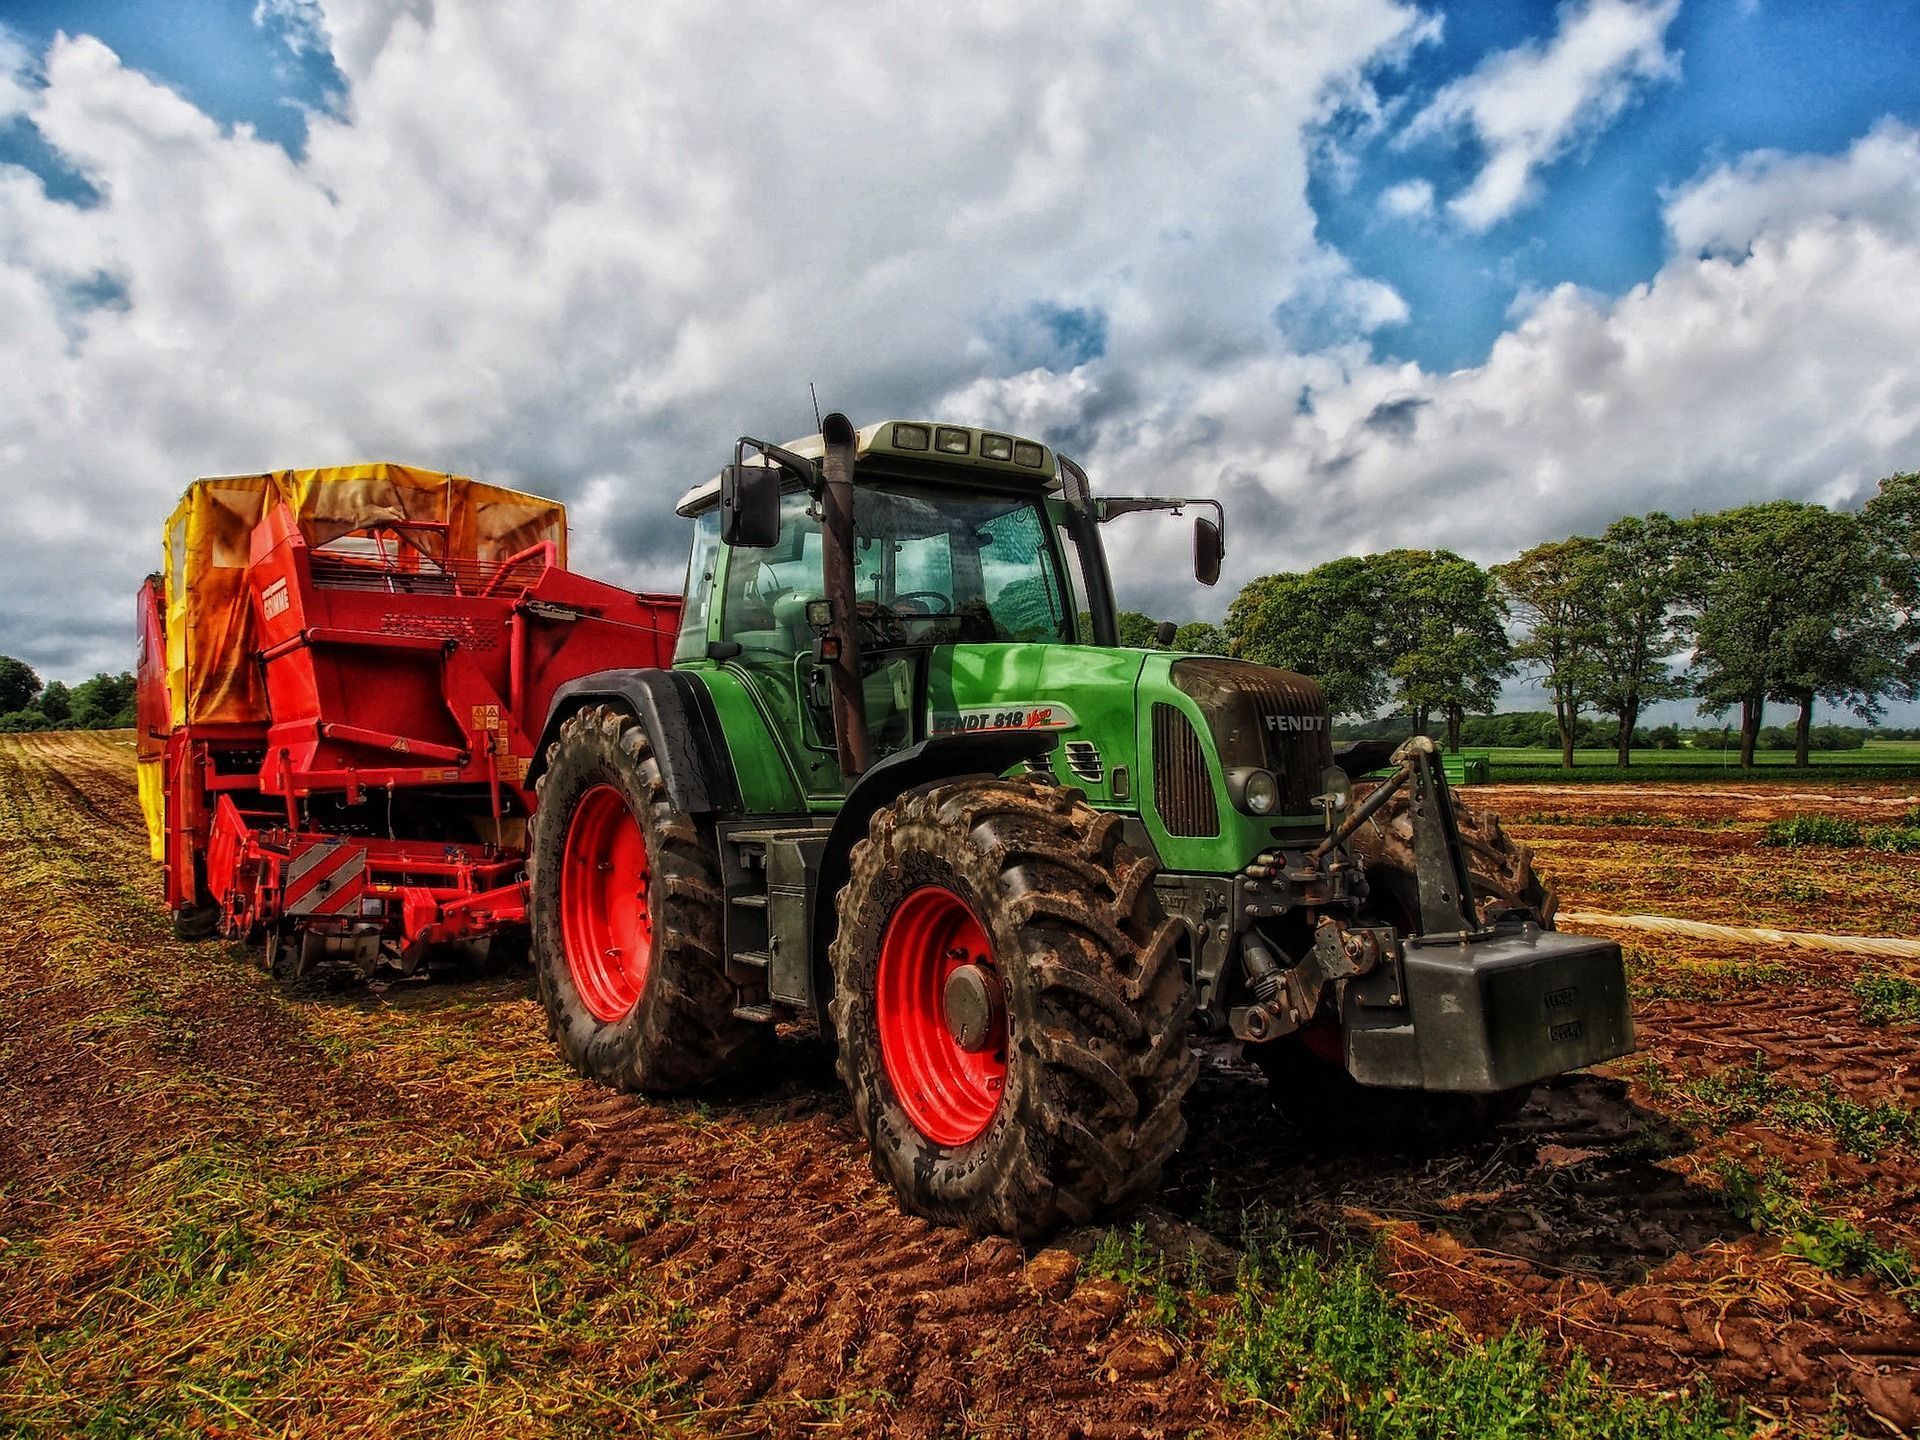  Traktor Hintergrundbild 1920x1440. Traktor leasen